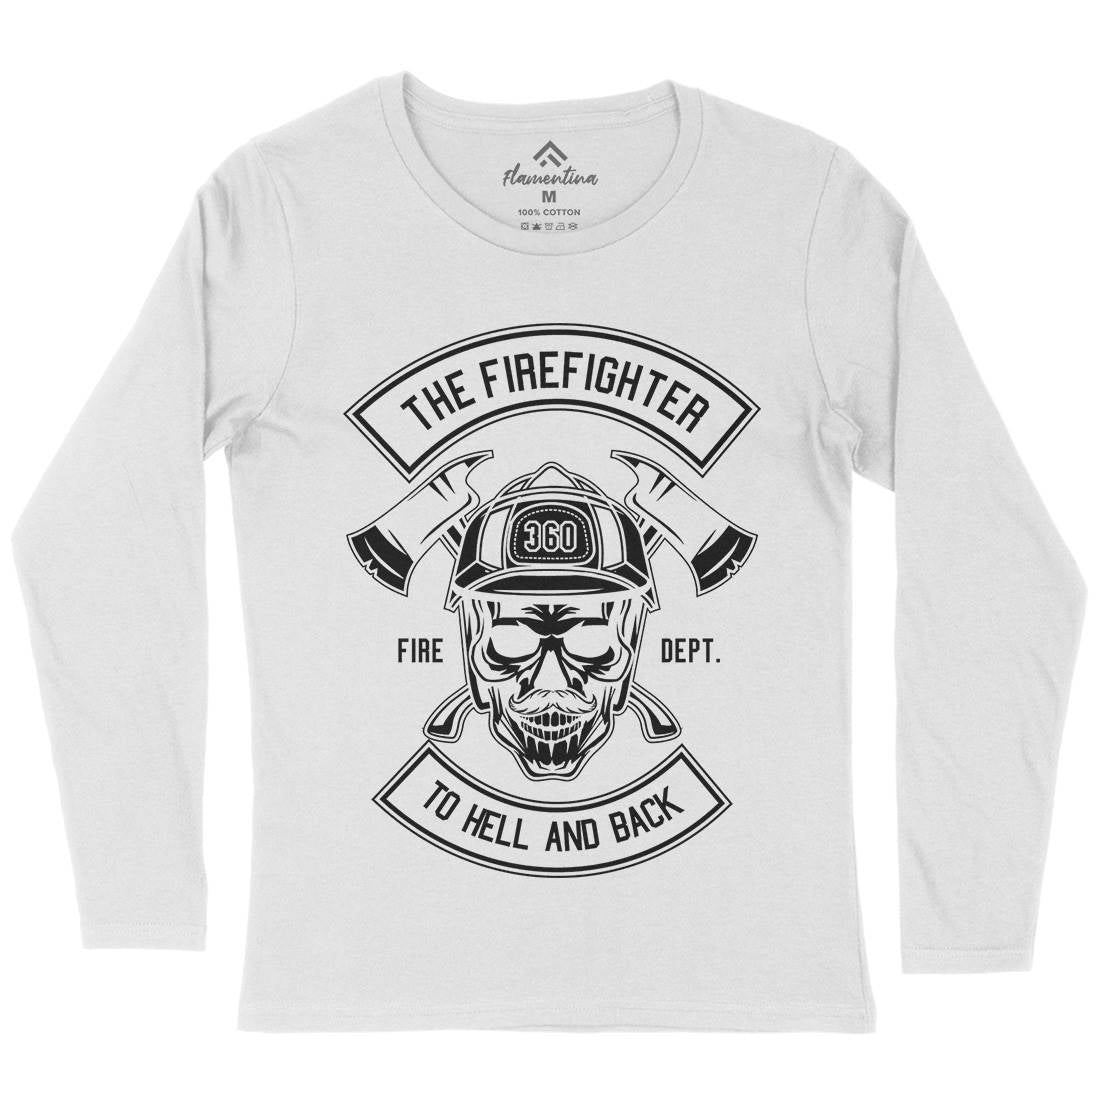 The Fire Fighter Womens Long Sleeve T-Shirt Firefighters B651